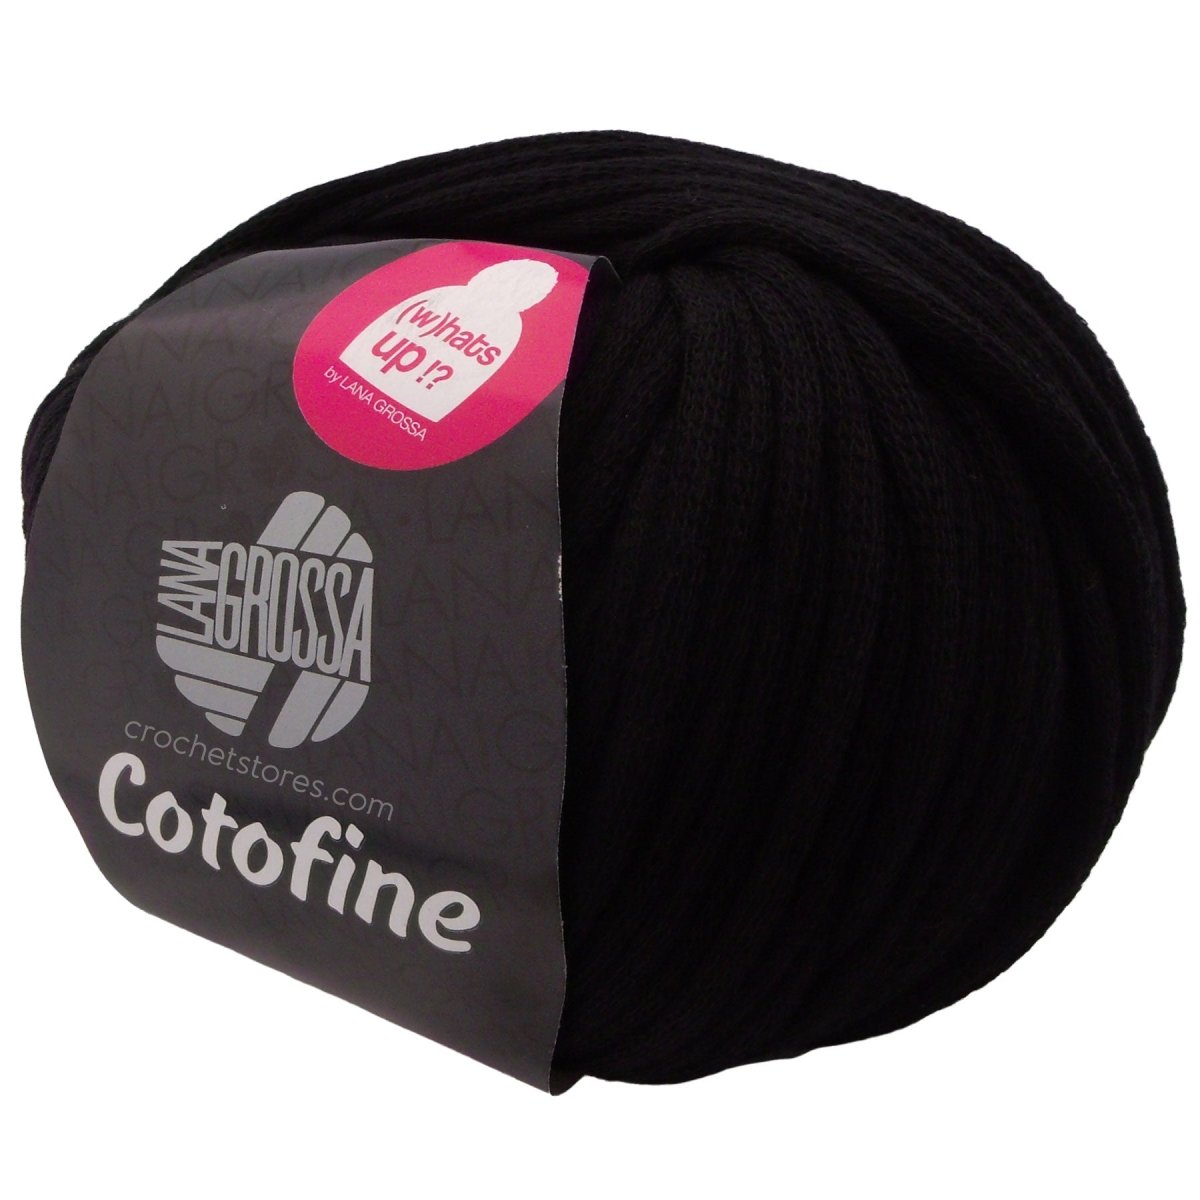 COTOFINE - Crochetstores276-00194033493119788